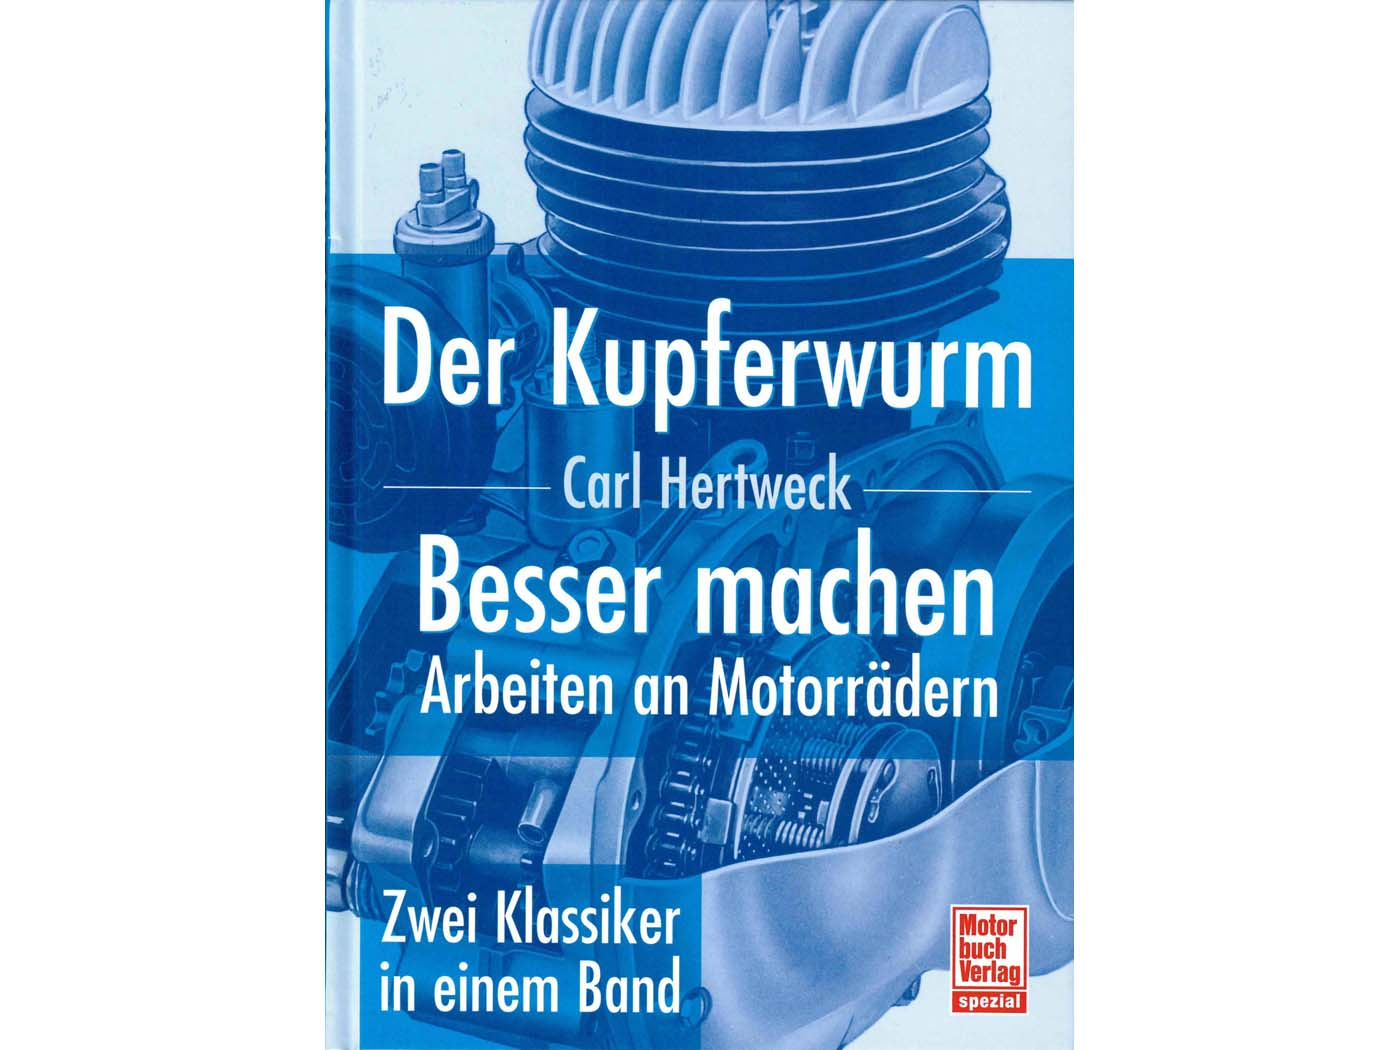 Copper Worm, Do Better, Work, Motorcycles, Data Technology, Book